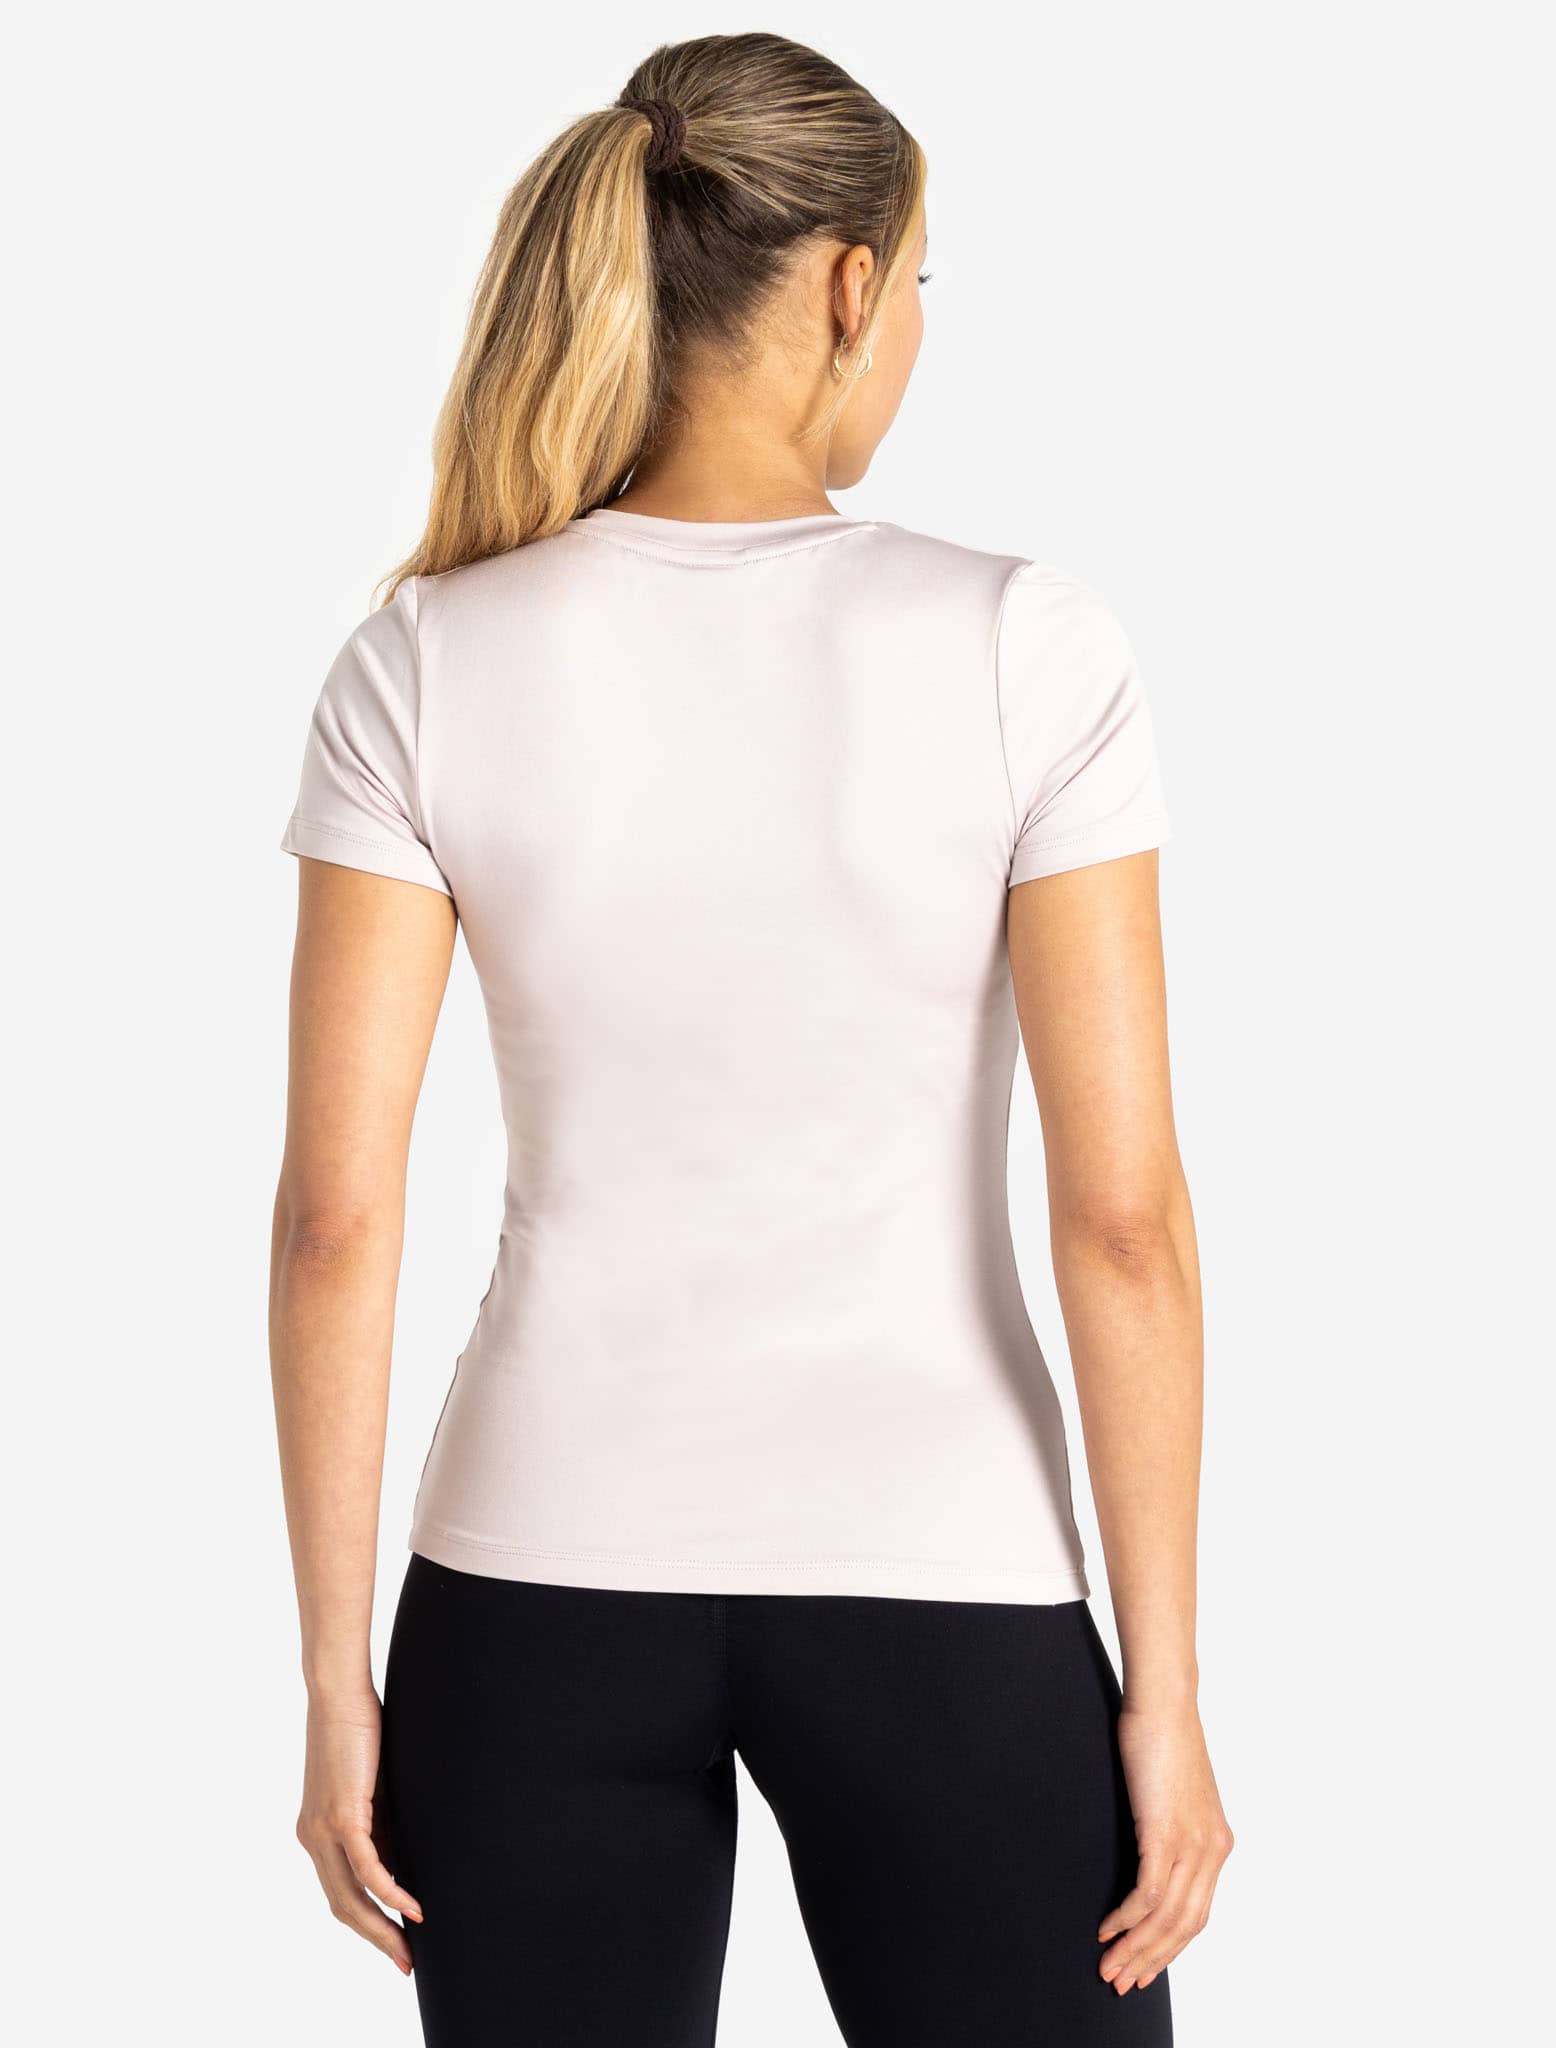 BreathEasy® Full-Length T-Shirt / Light Grey Pursue Fitness 4